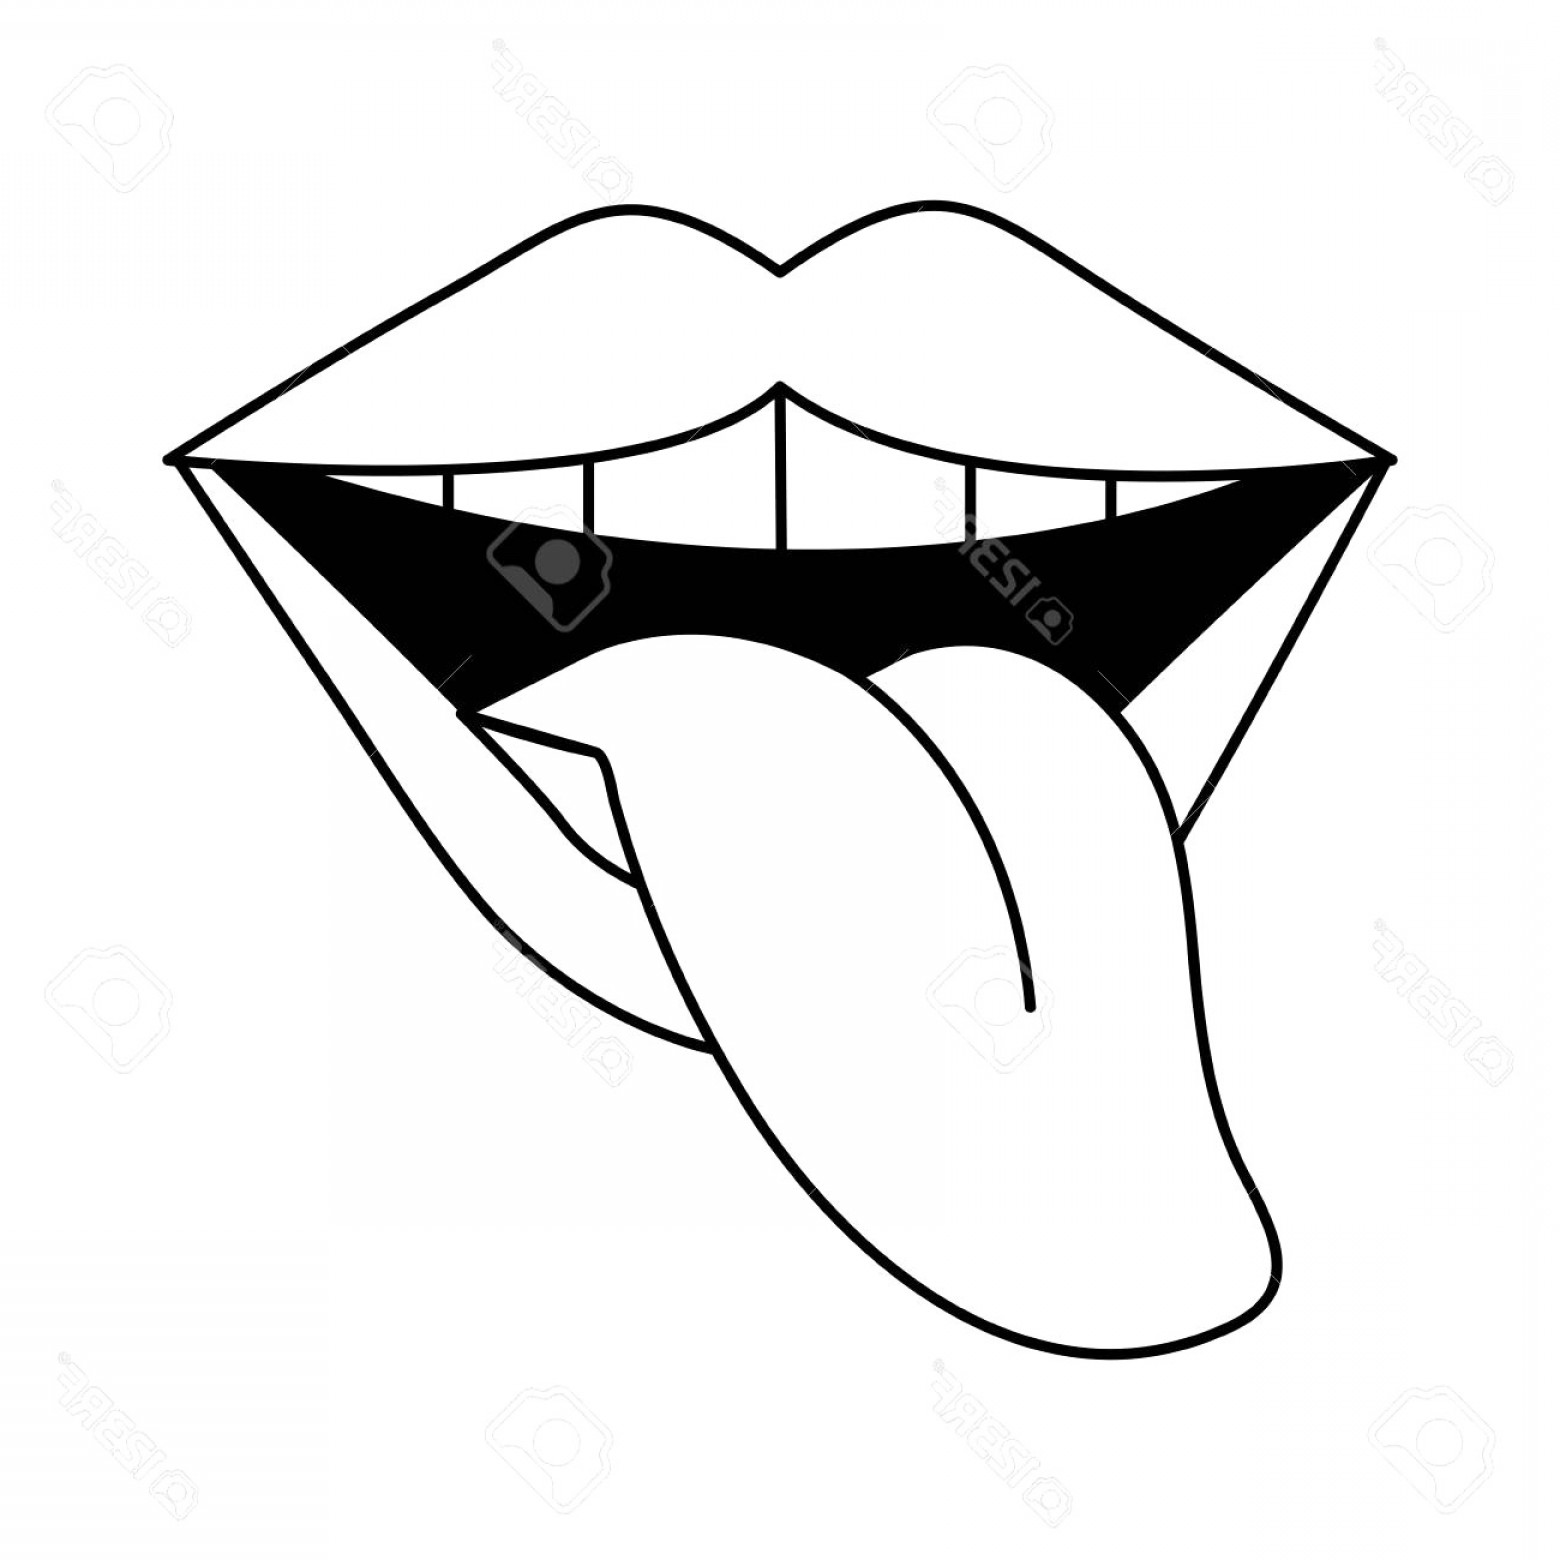 Drawn Tongue clip art